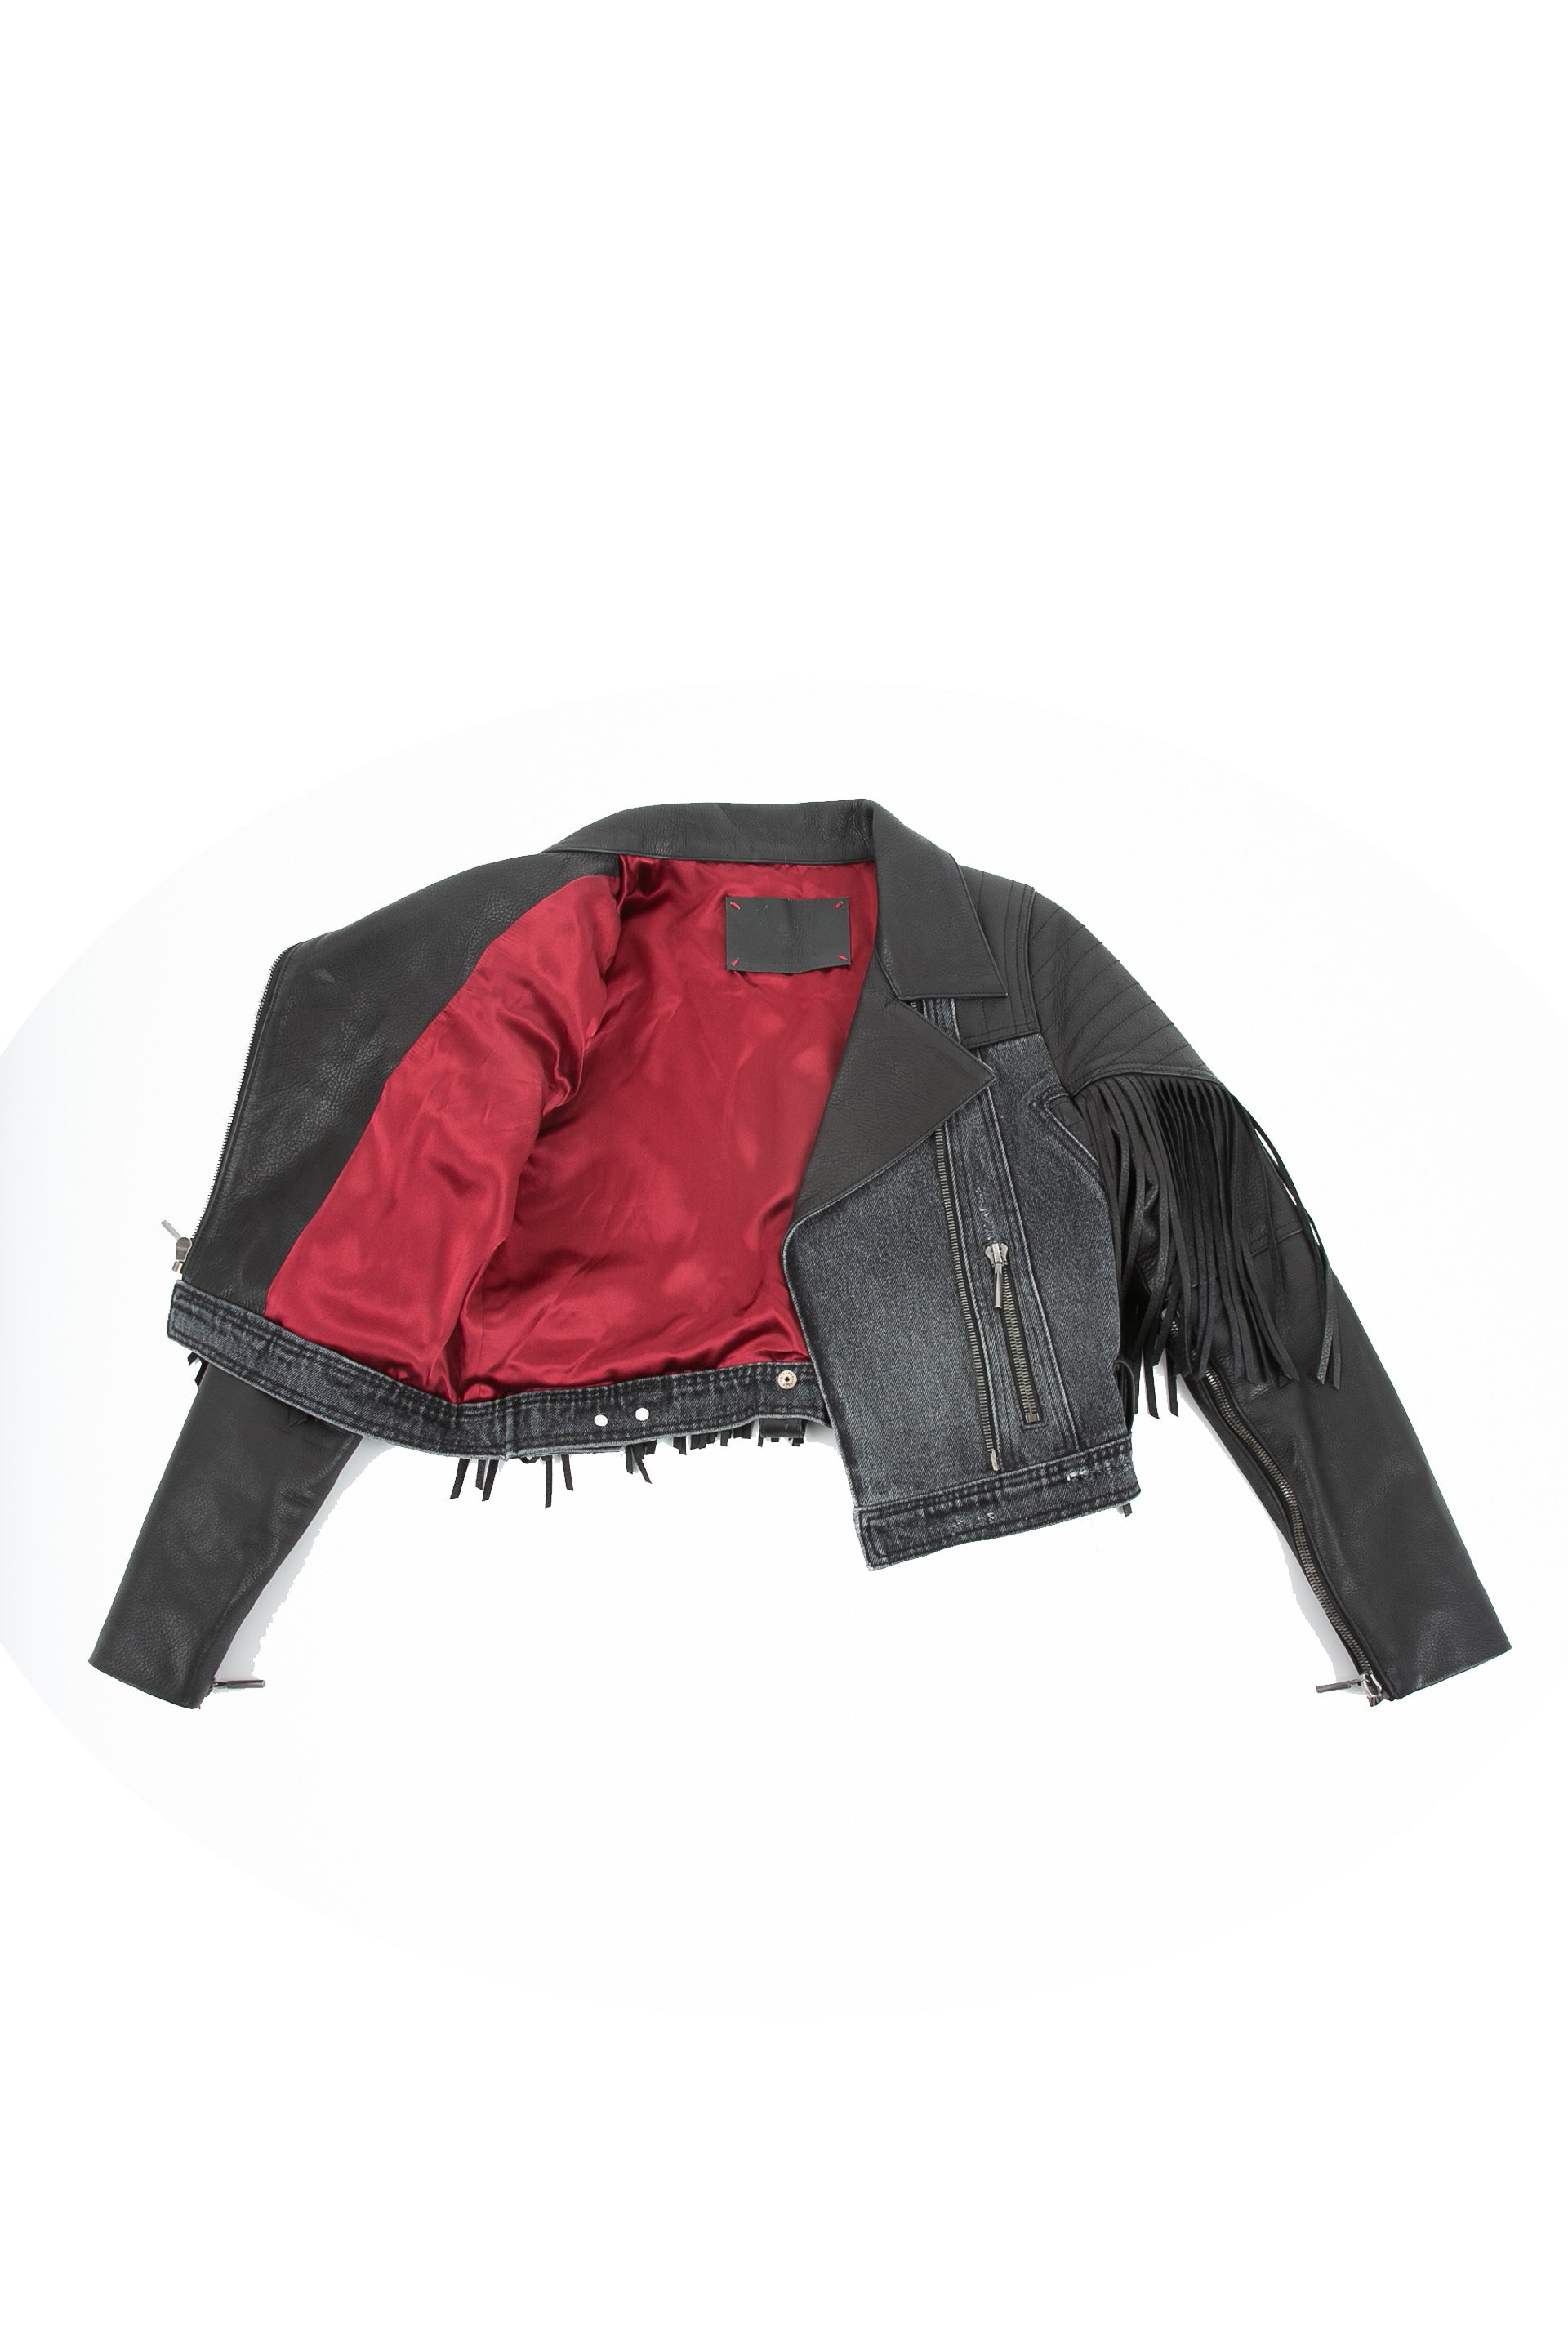 Inside of La Matadora leather jacket